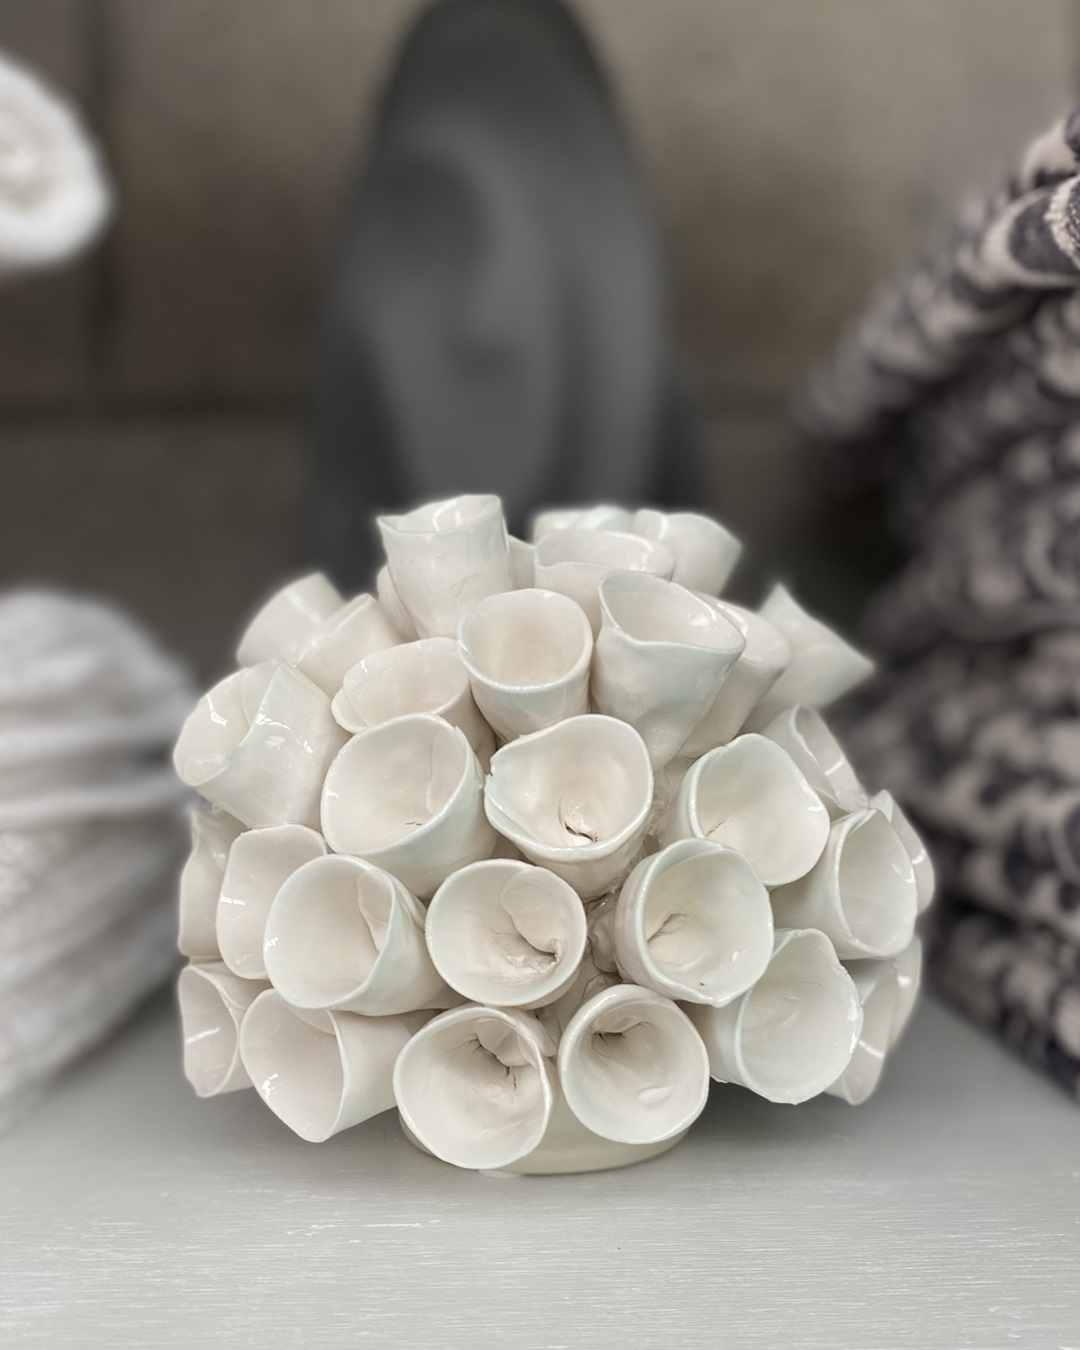 Ceramic white coral display item on shelf